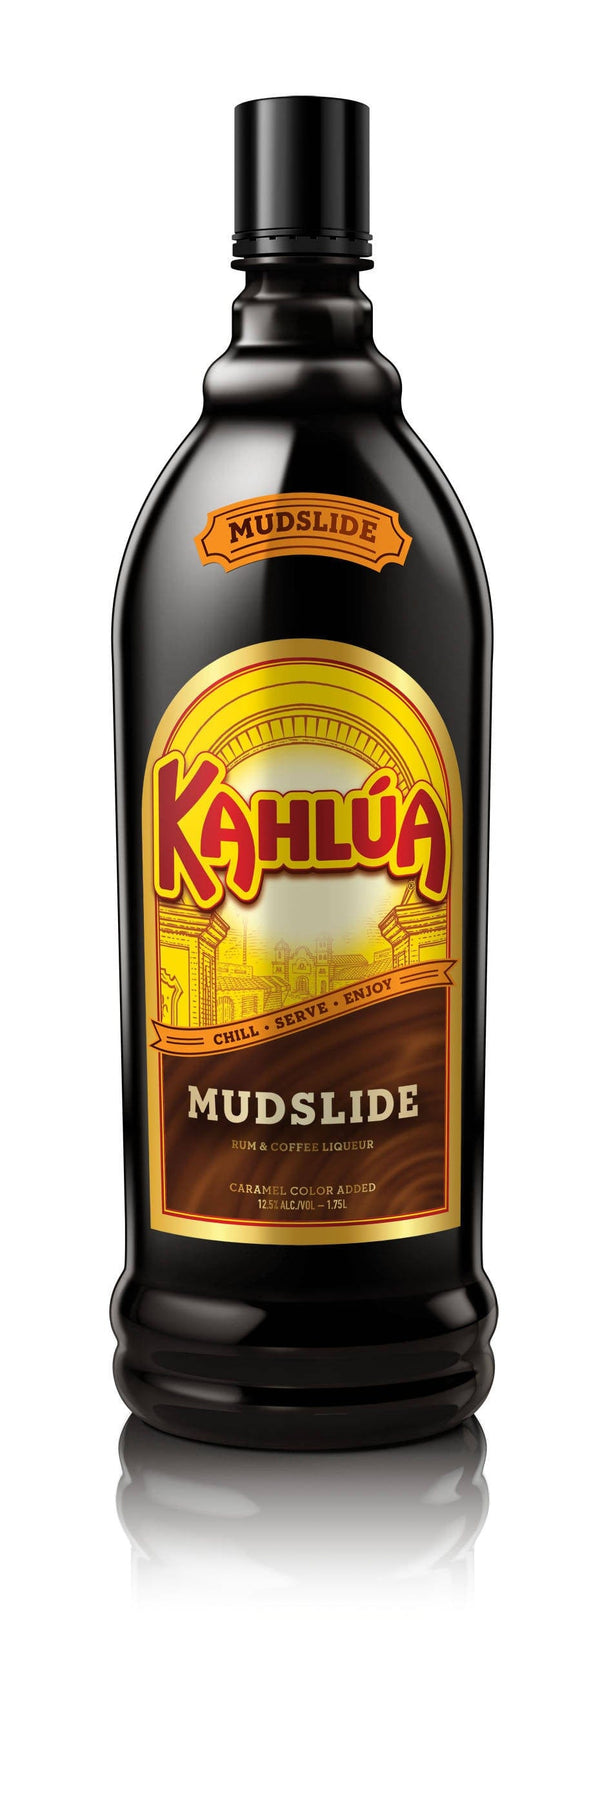 KAHLUA READY-TO-DRINK MUDSLIDE 1.75L – Banks Wines & Spirits